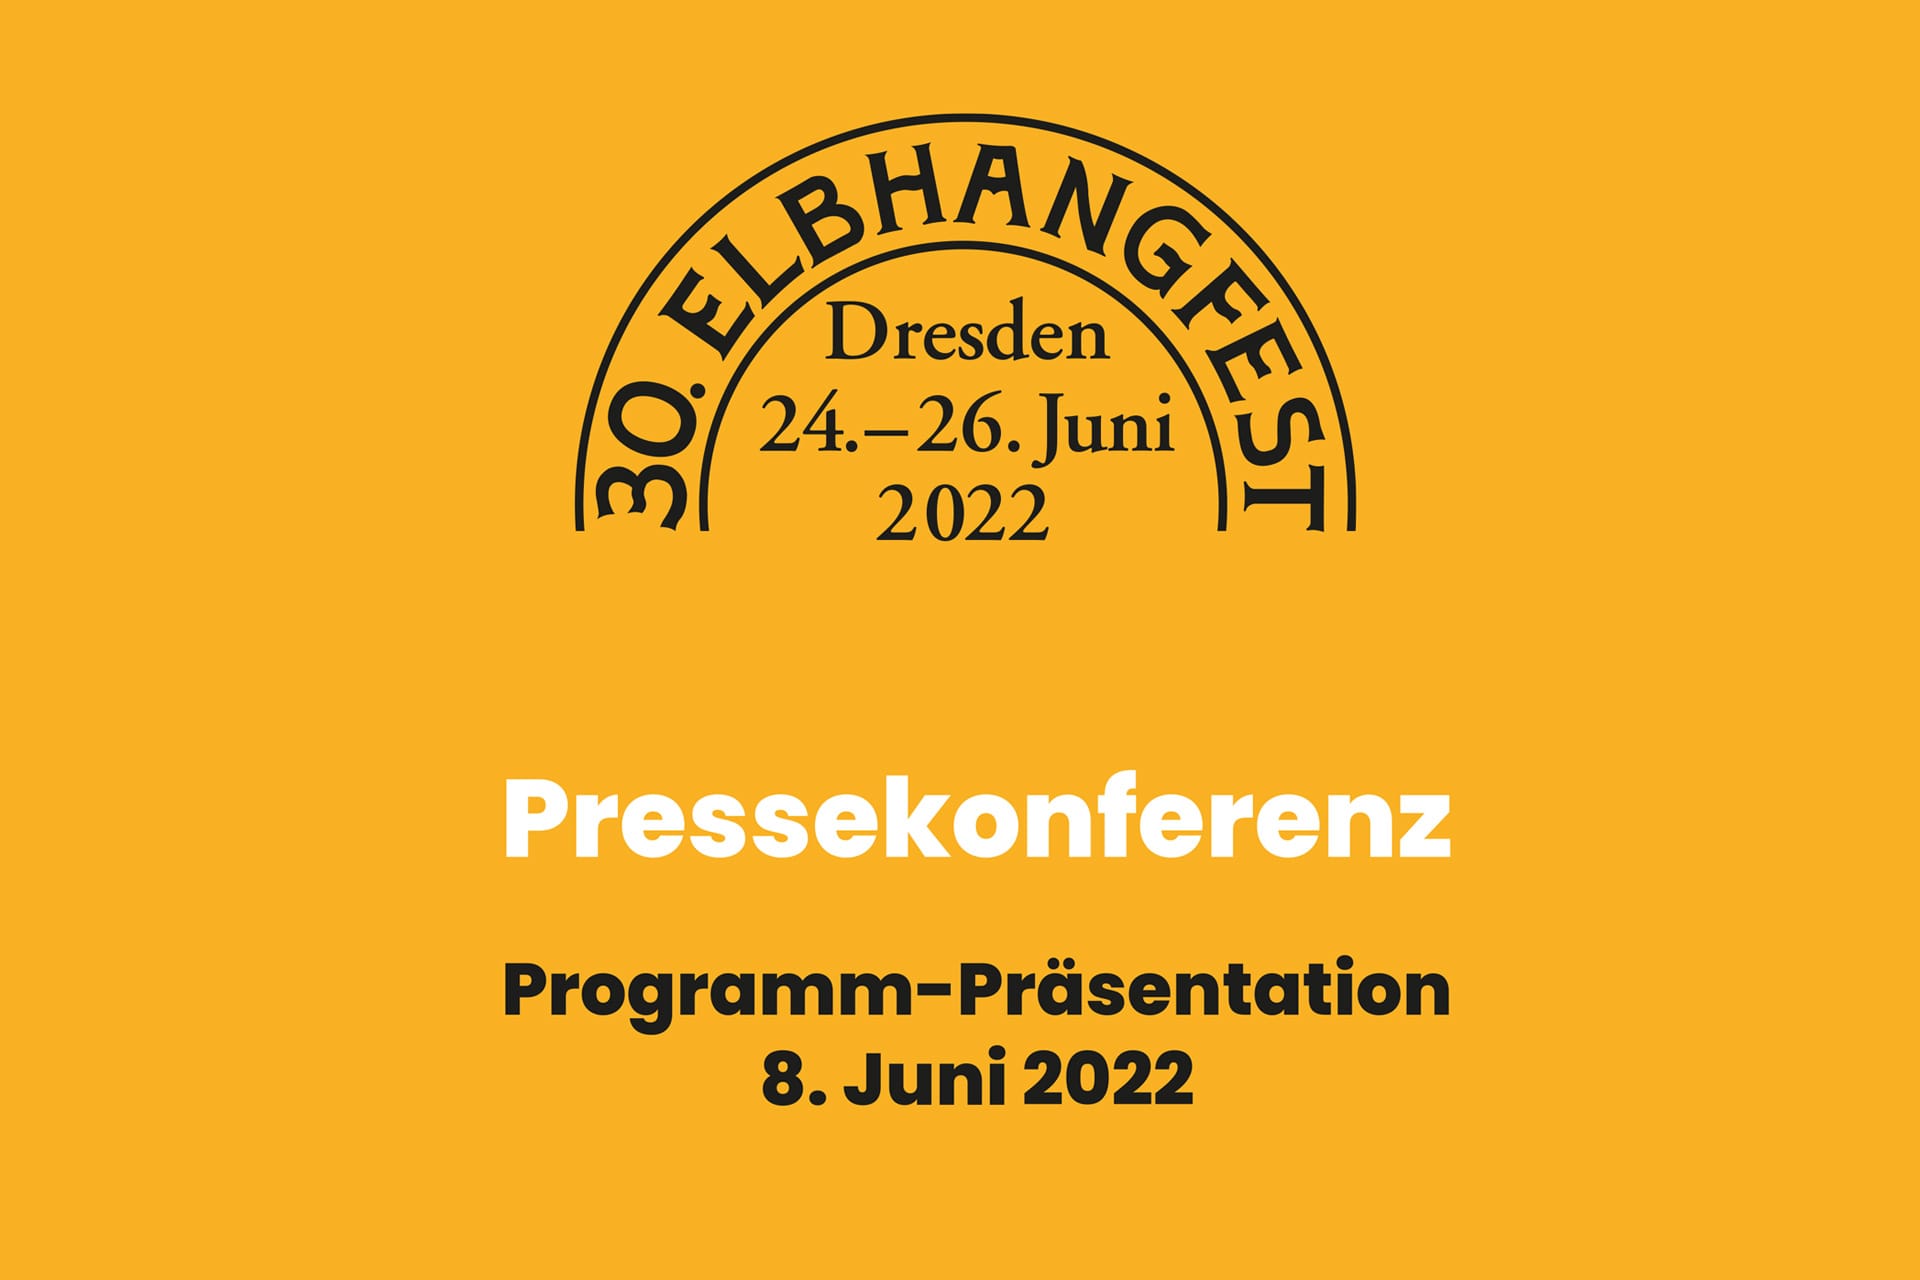 Pressekonferenz am 8. Juni 2022